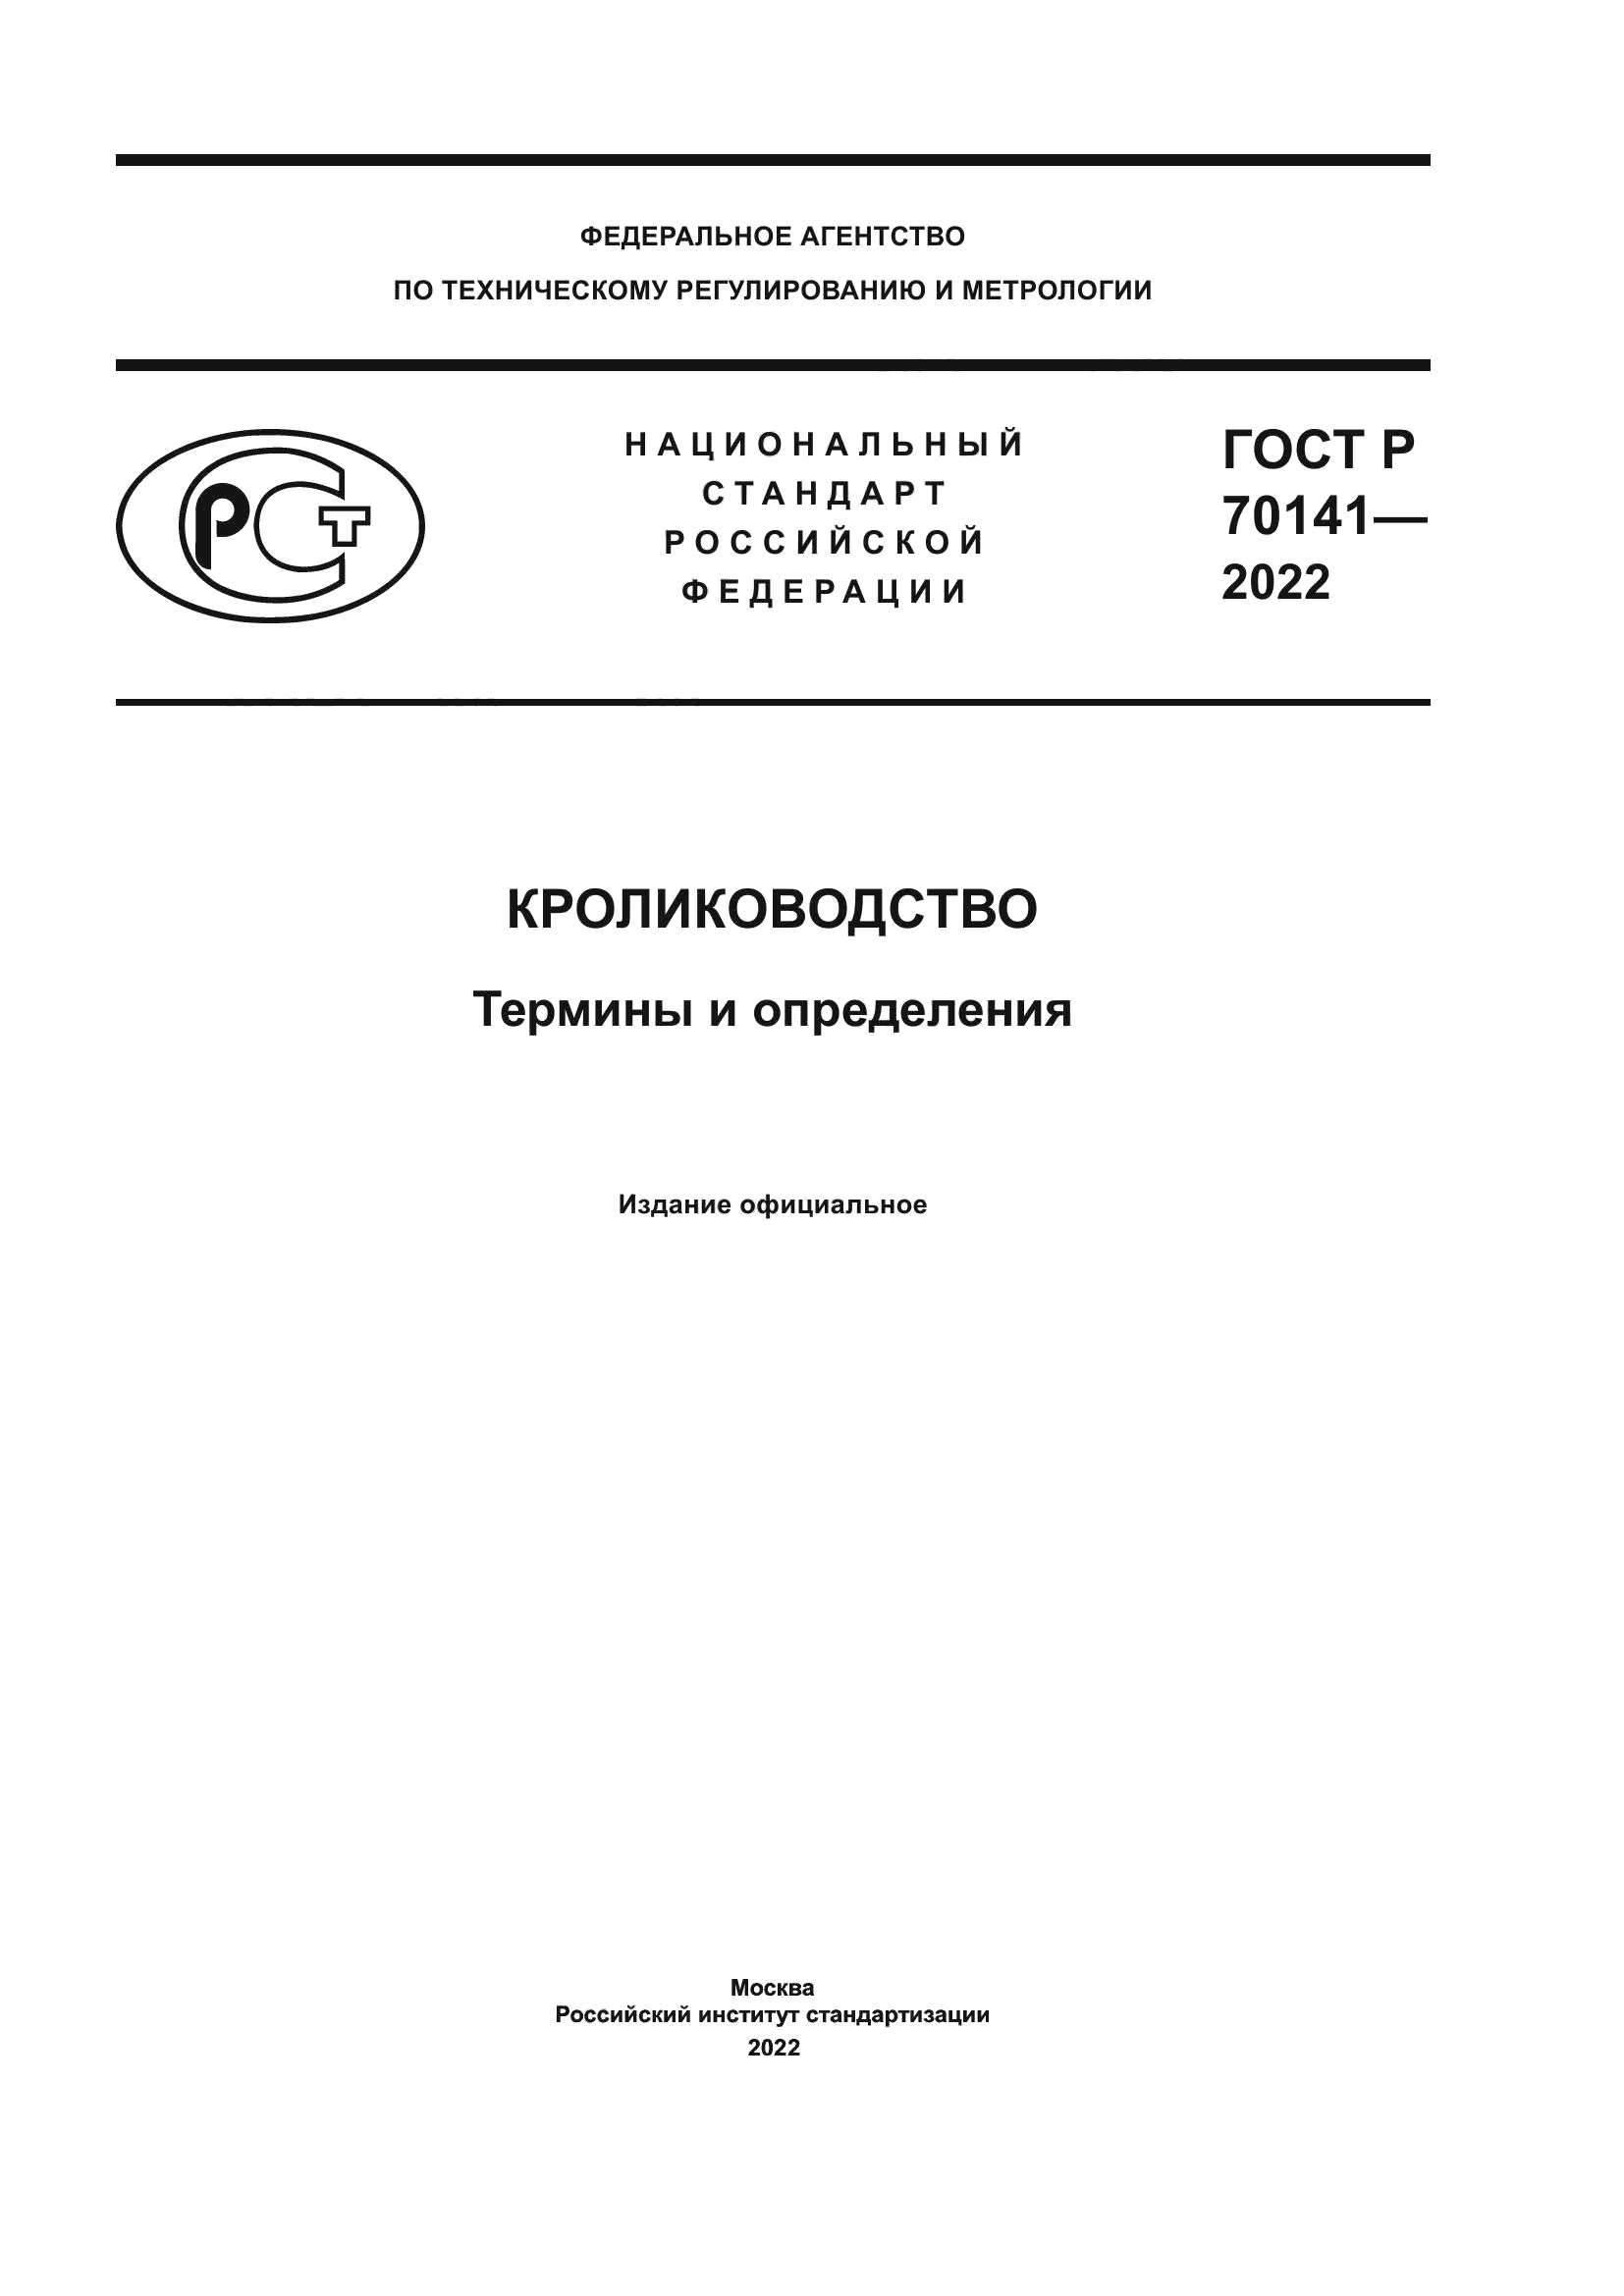 ГОСТ Р 70141-2022